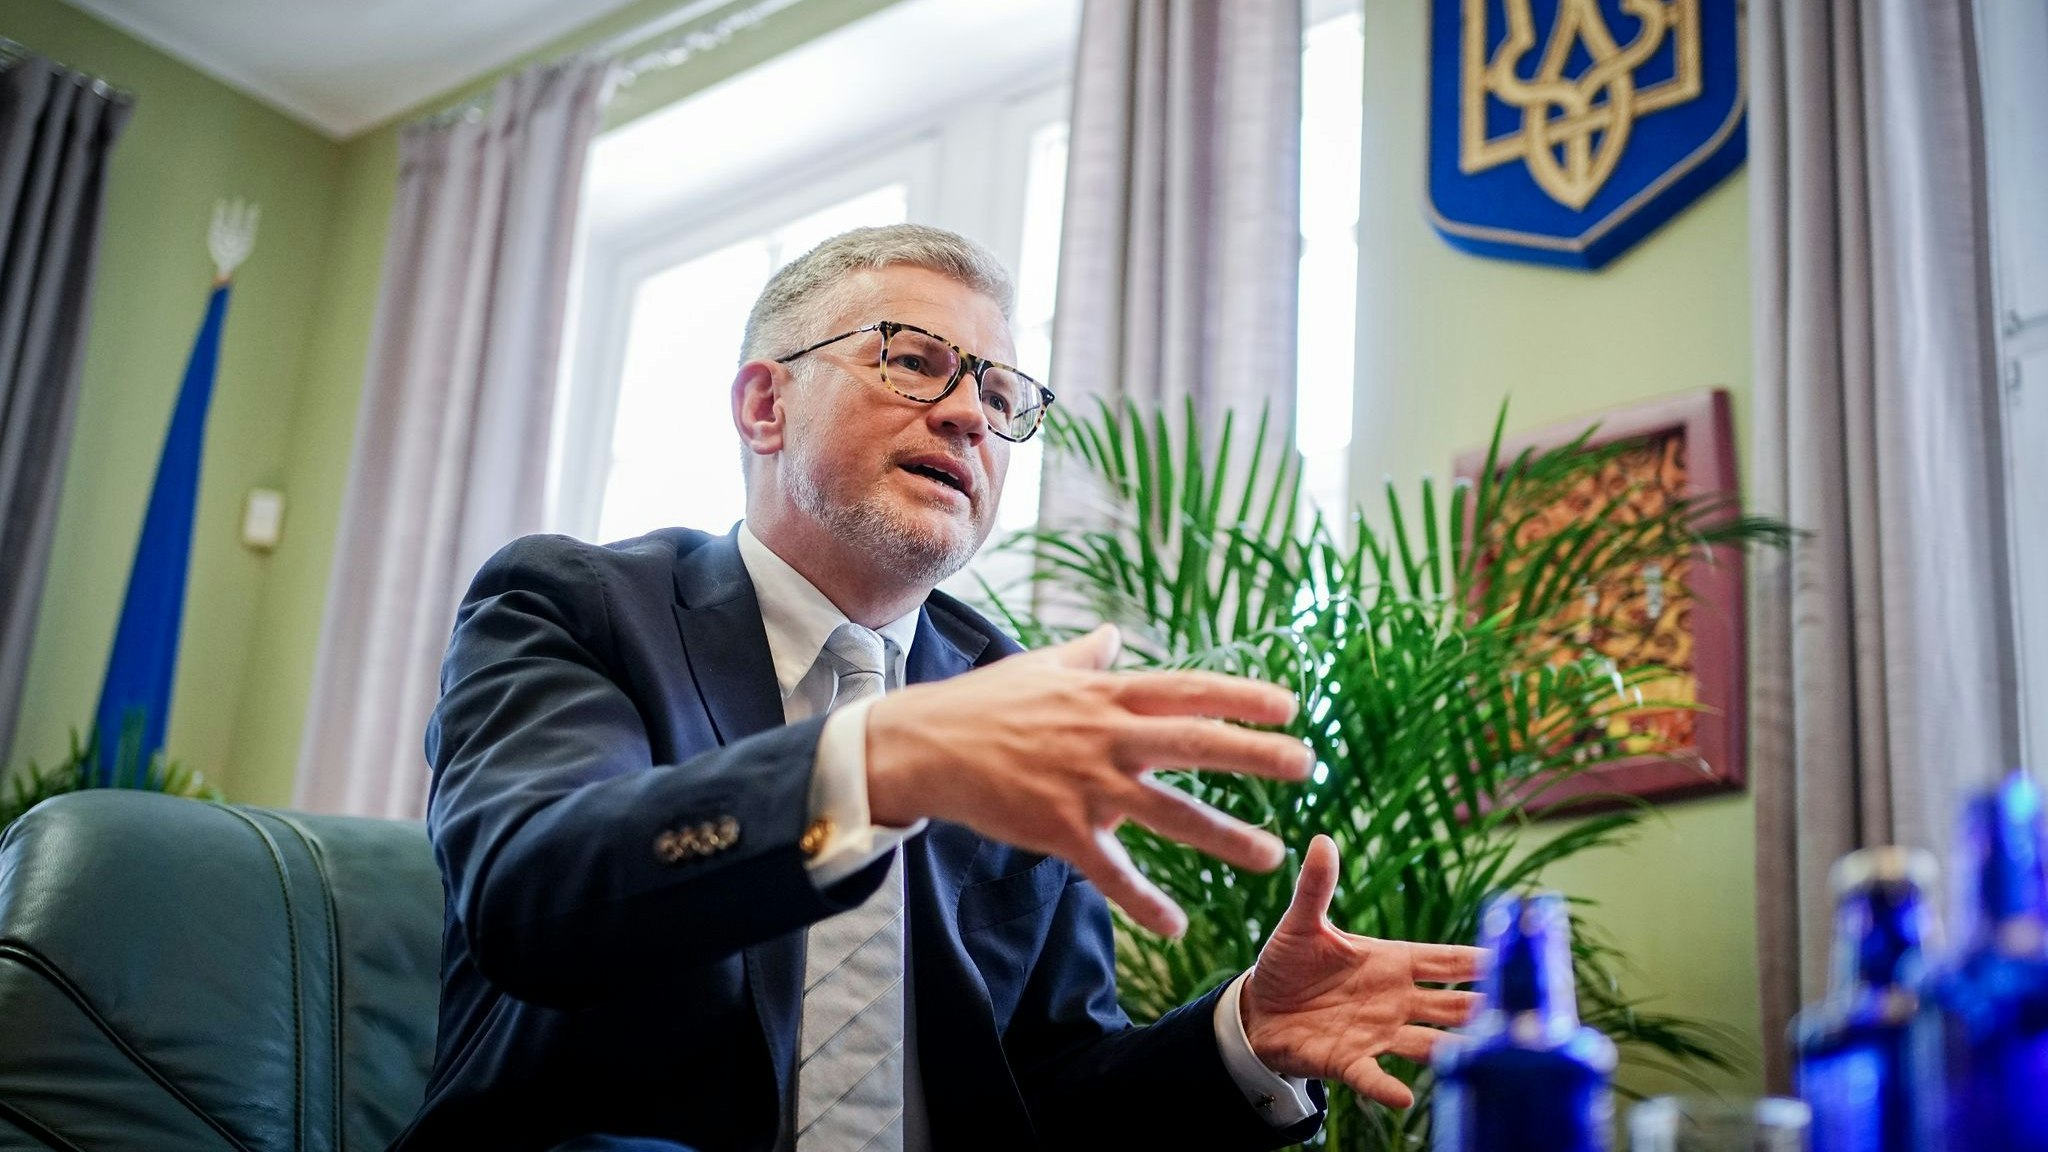 Andrij Melnyk ist Botschafter der Ukraine in Deutschland. Foto: dpa/Nietfeld